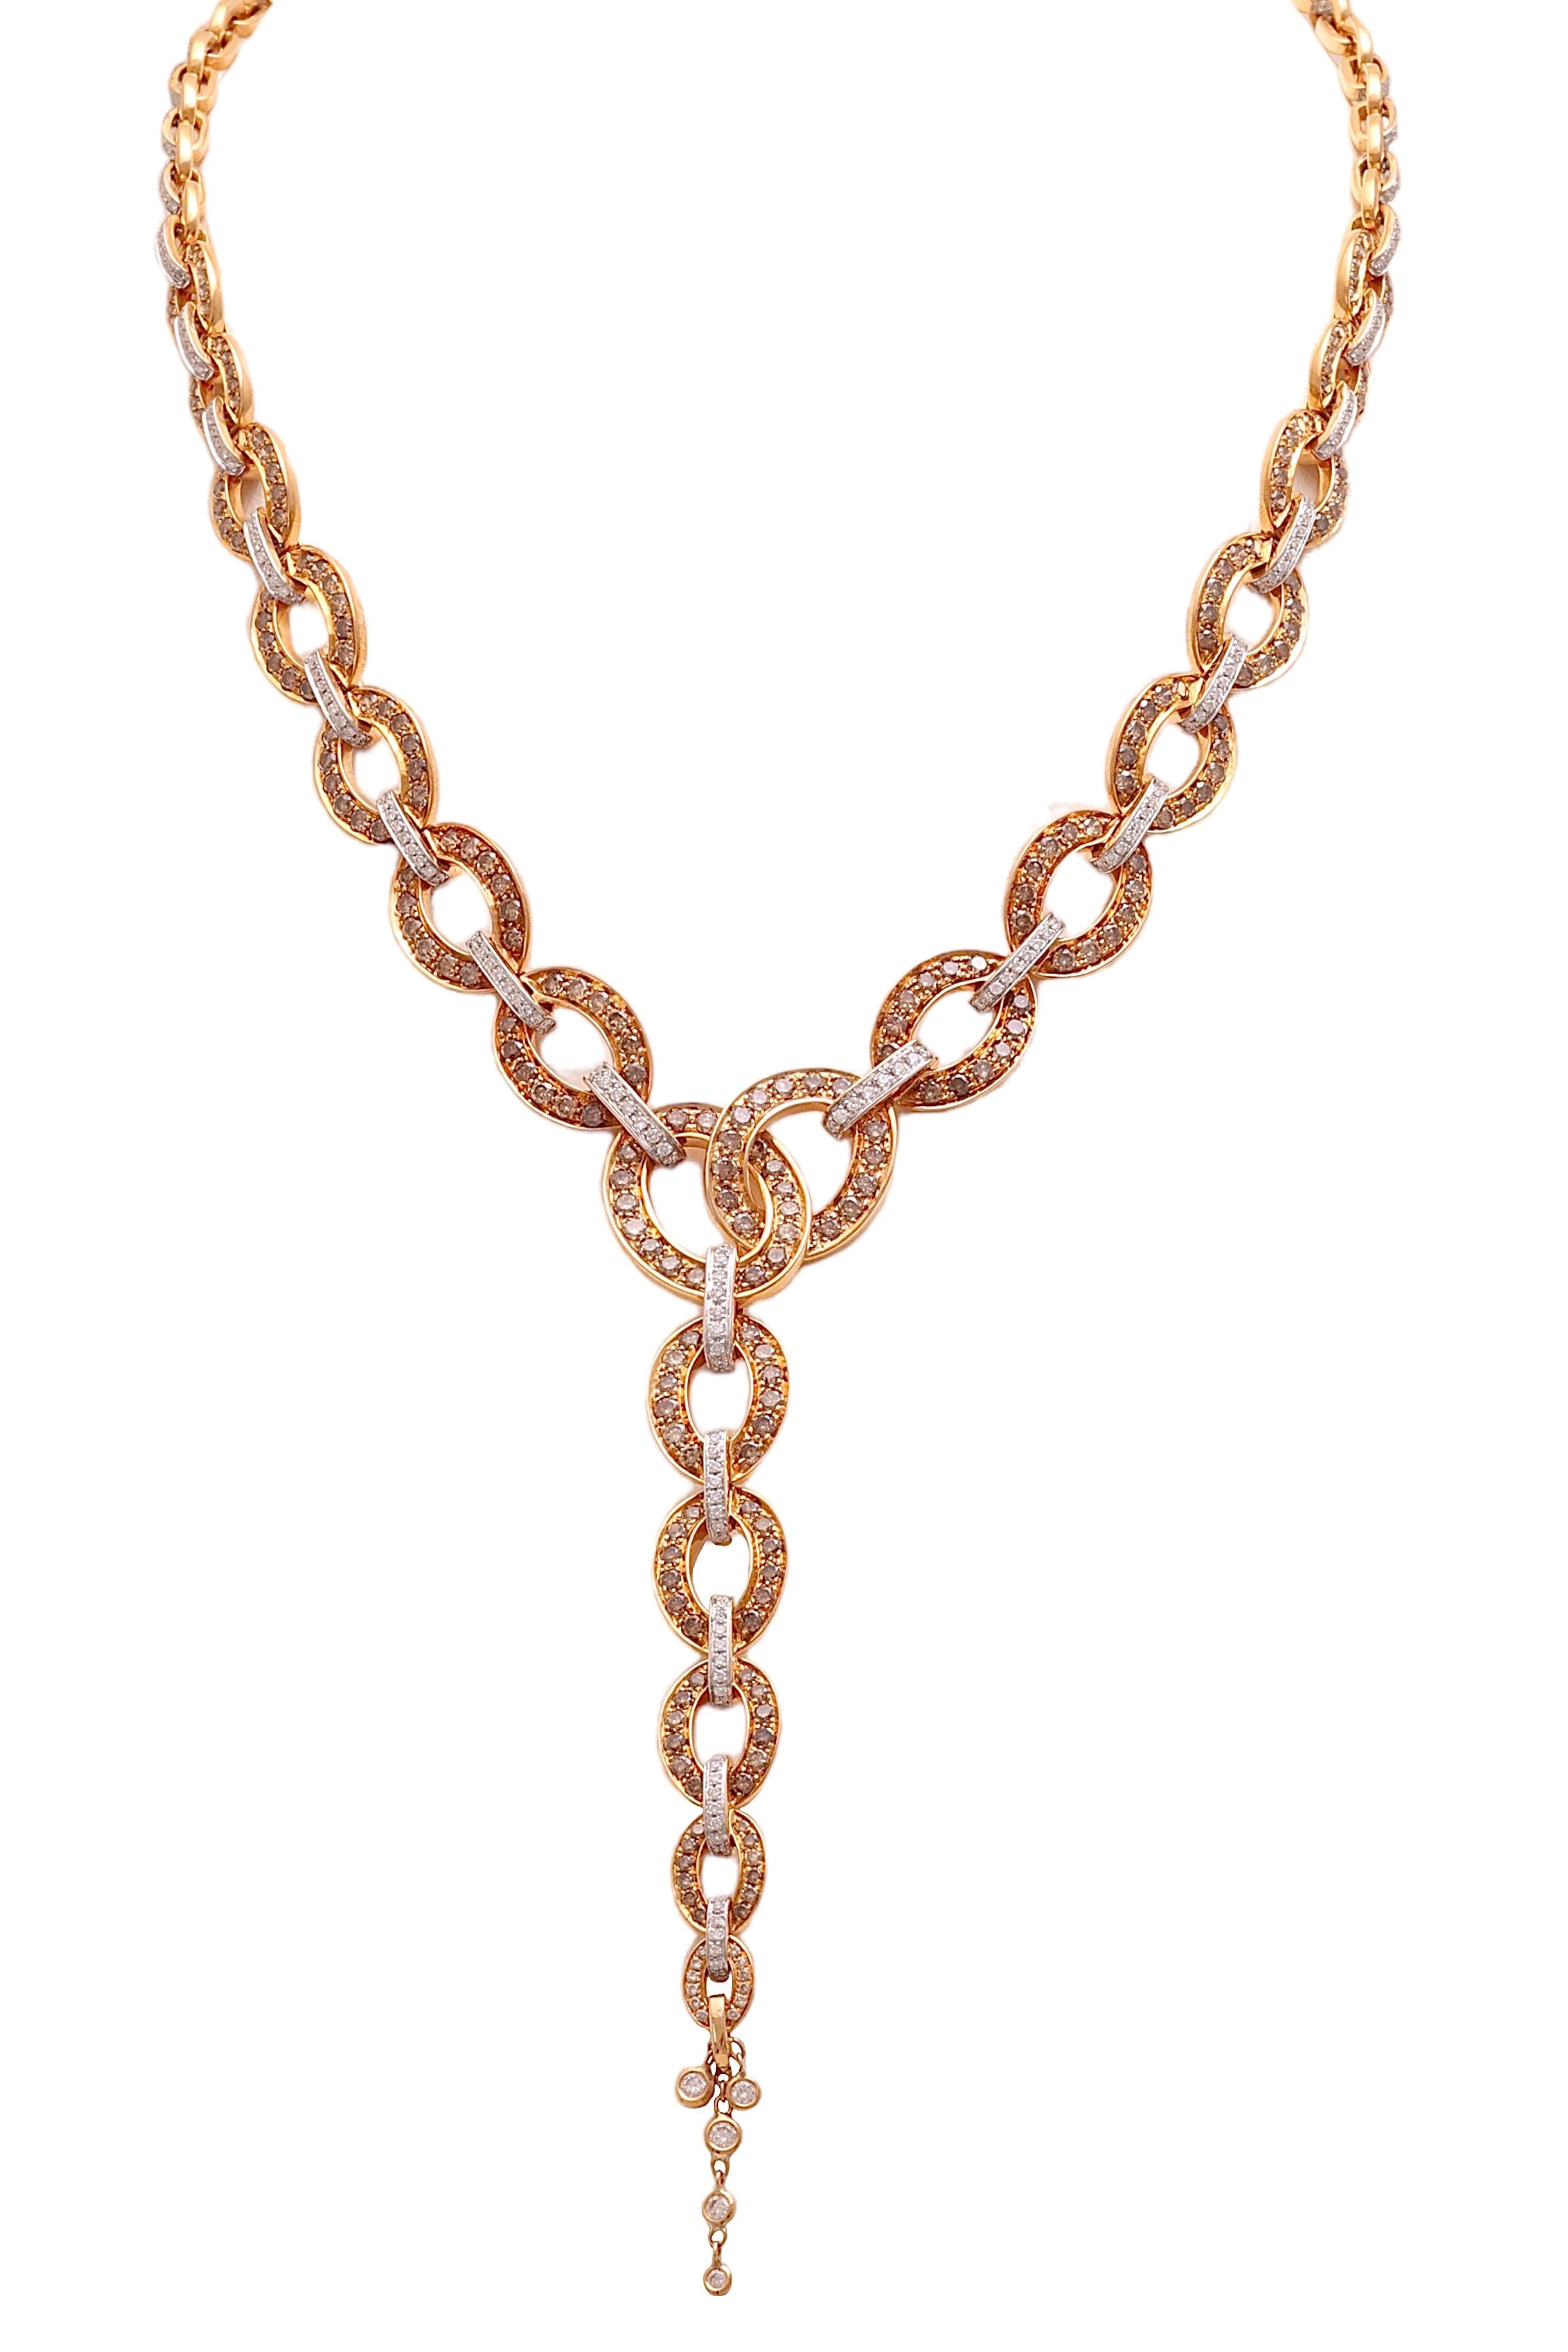 Brilliant Cut 18 kt. Pink & White Gold SET Necklace & Earrings Cognac & White 9.44 Ct Diamonds For Sale